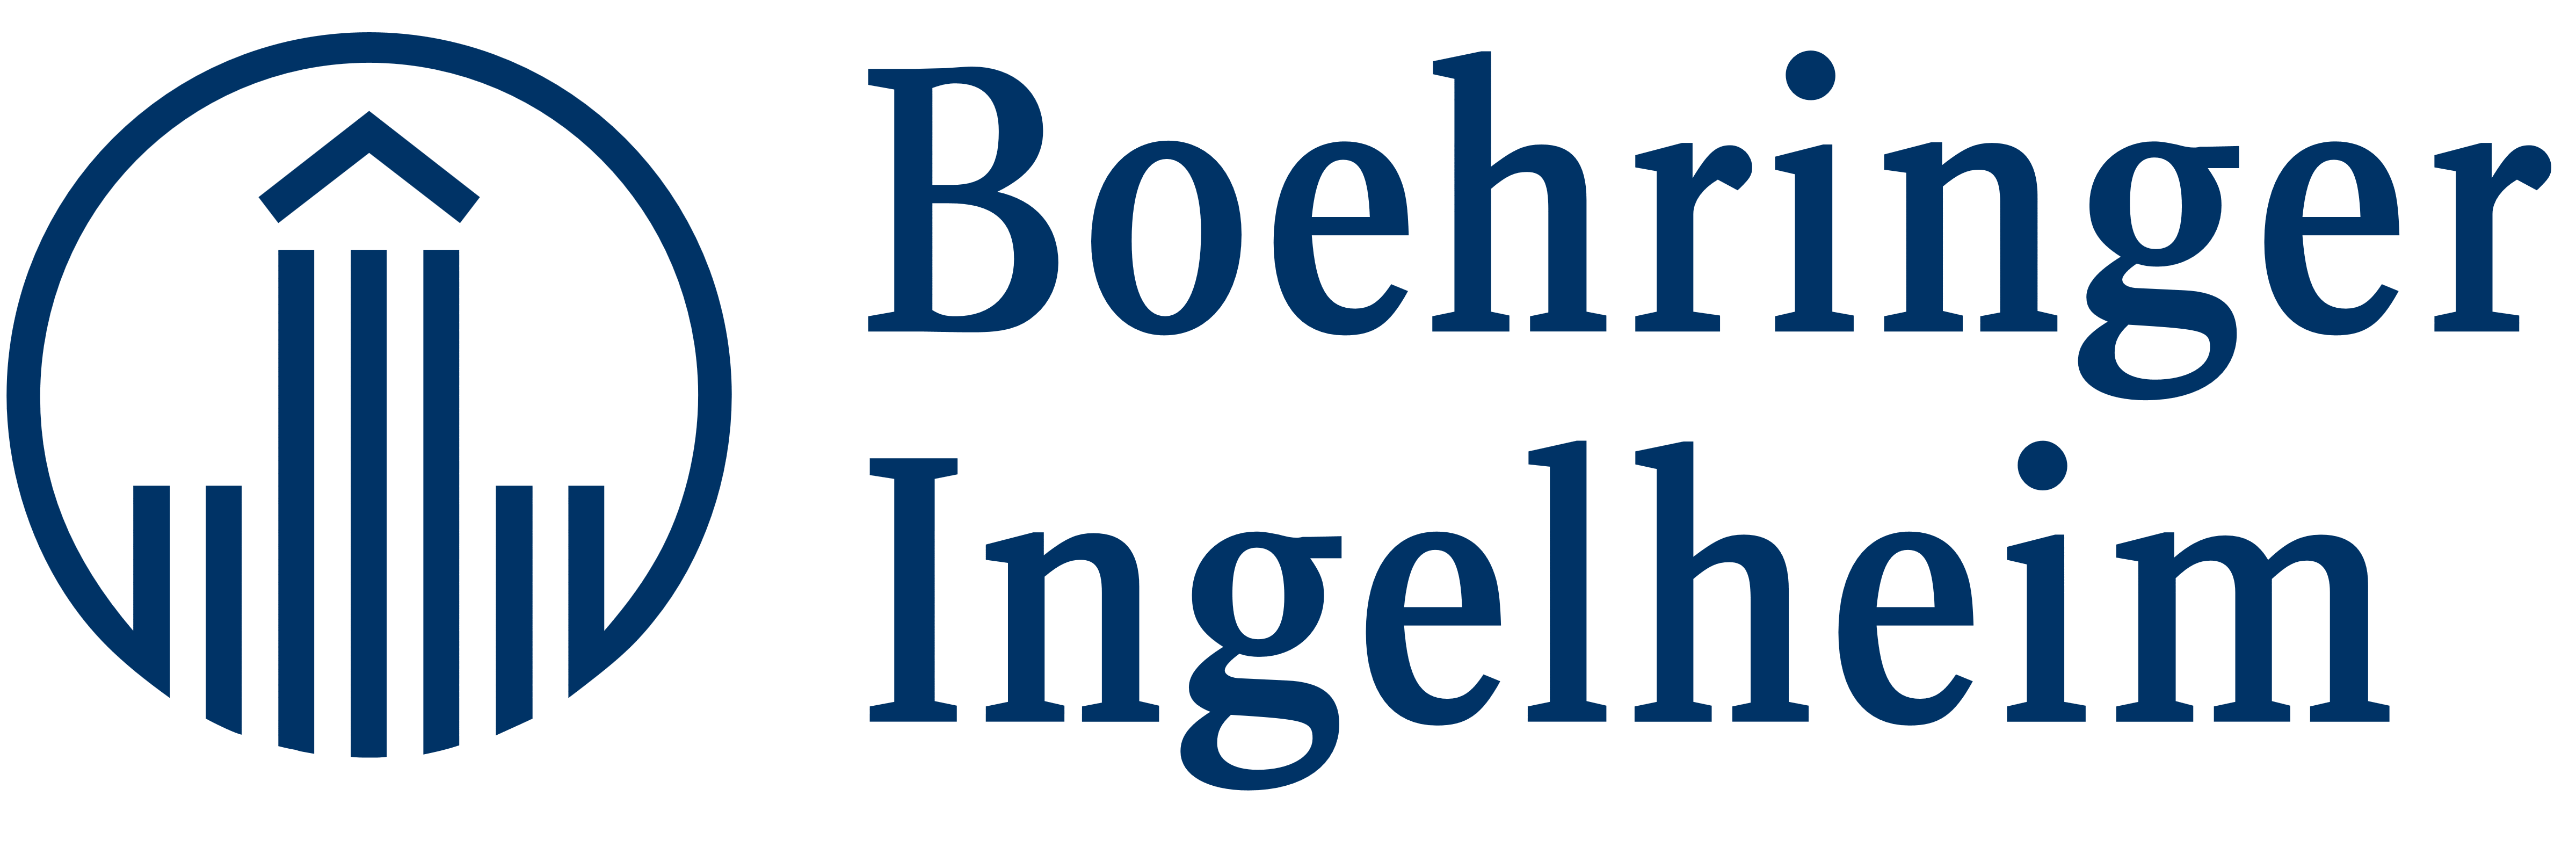 Boehringer Logo - Boehringer Ingelheim – Logos Download